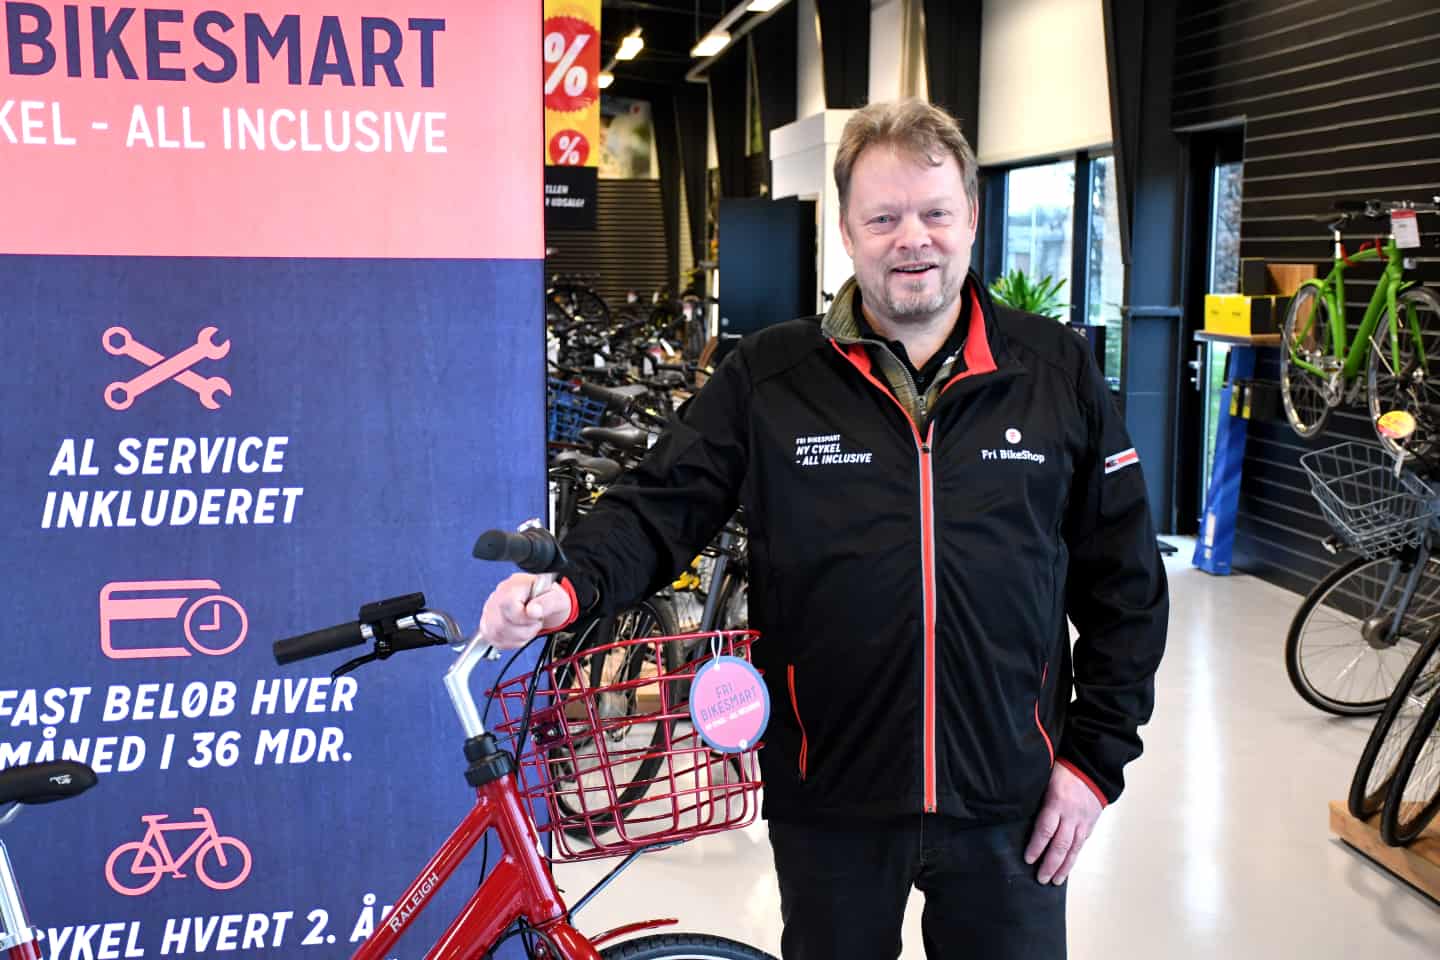 Cykelbutik på 1000 kvadratmeter åbnet i Kolding | ugeavisen.dk